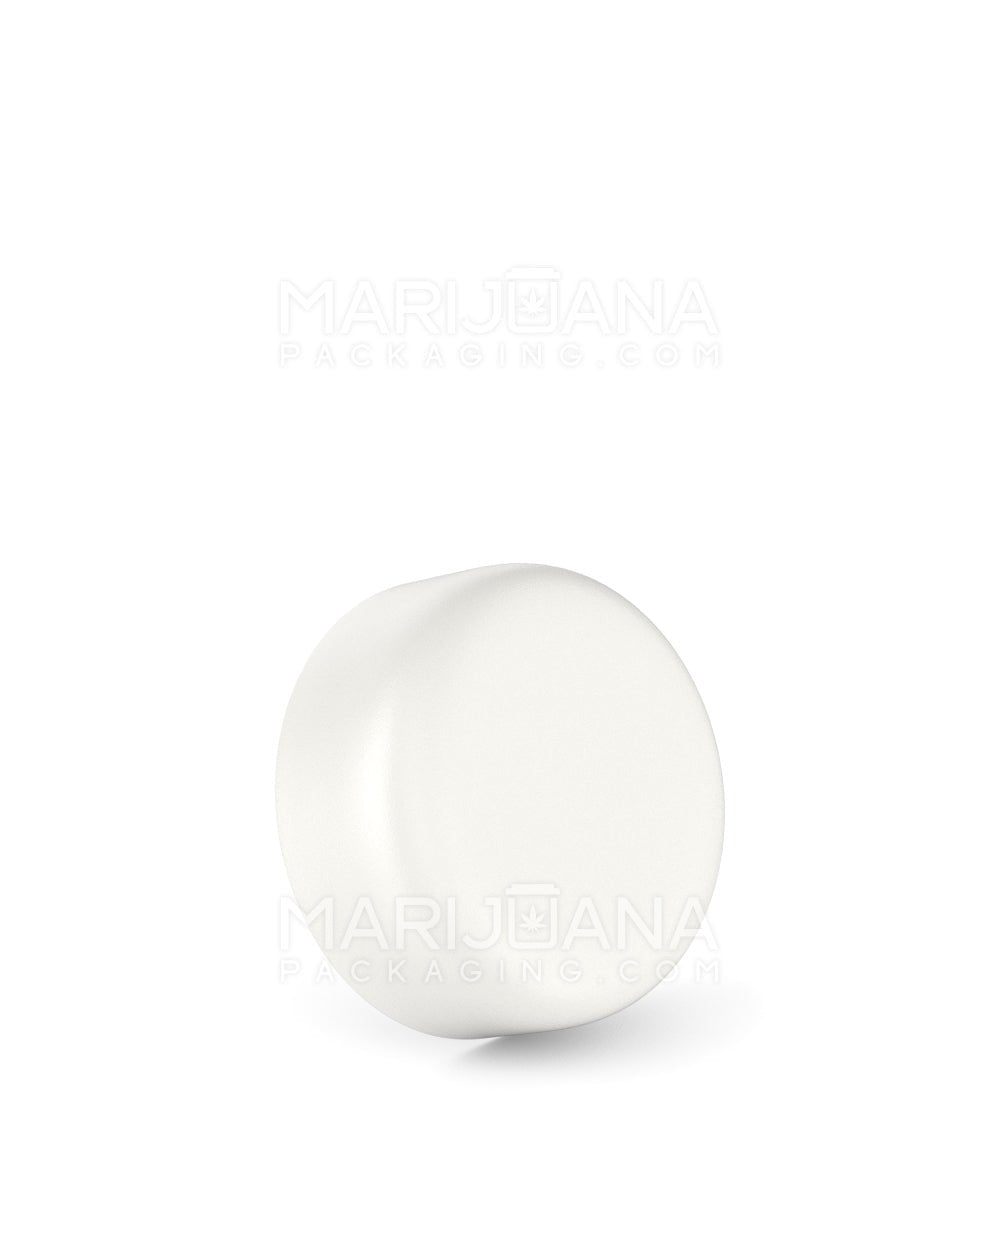 POLLEN GEAR | HiLine Child Resistant Smooth Push Down & Turn Plastic Round Caps w/ Foam Liner | 28mm - Matte White - 308 Count - 1